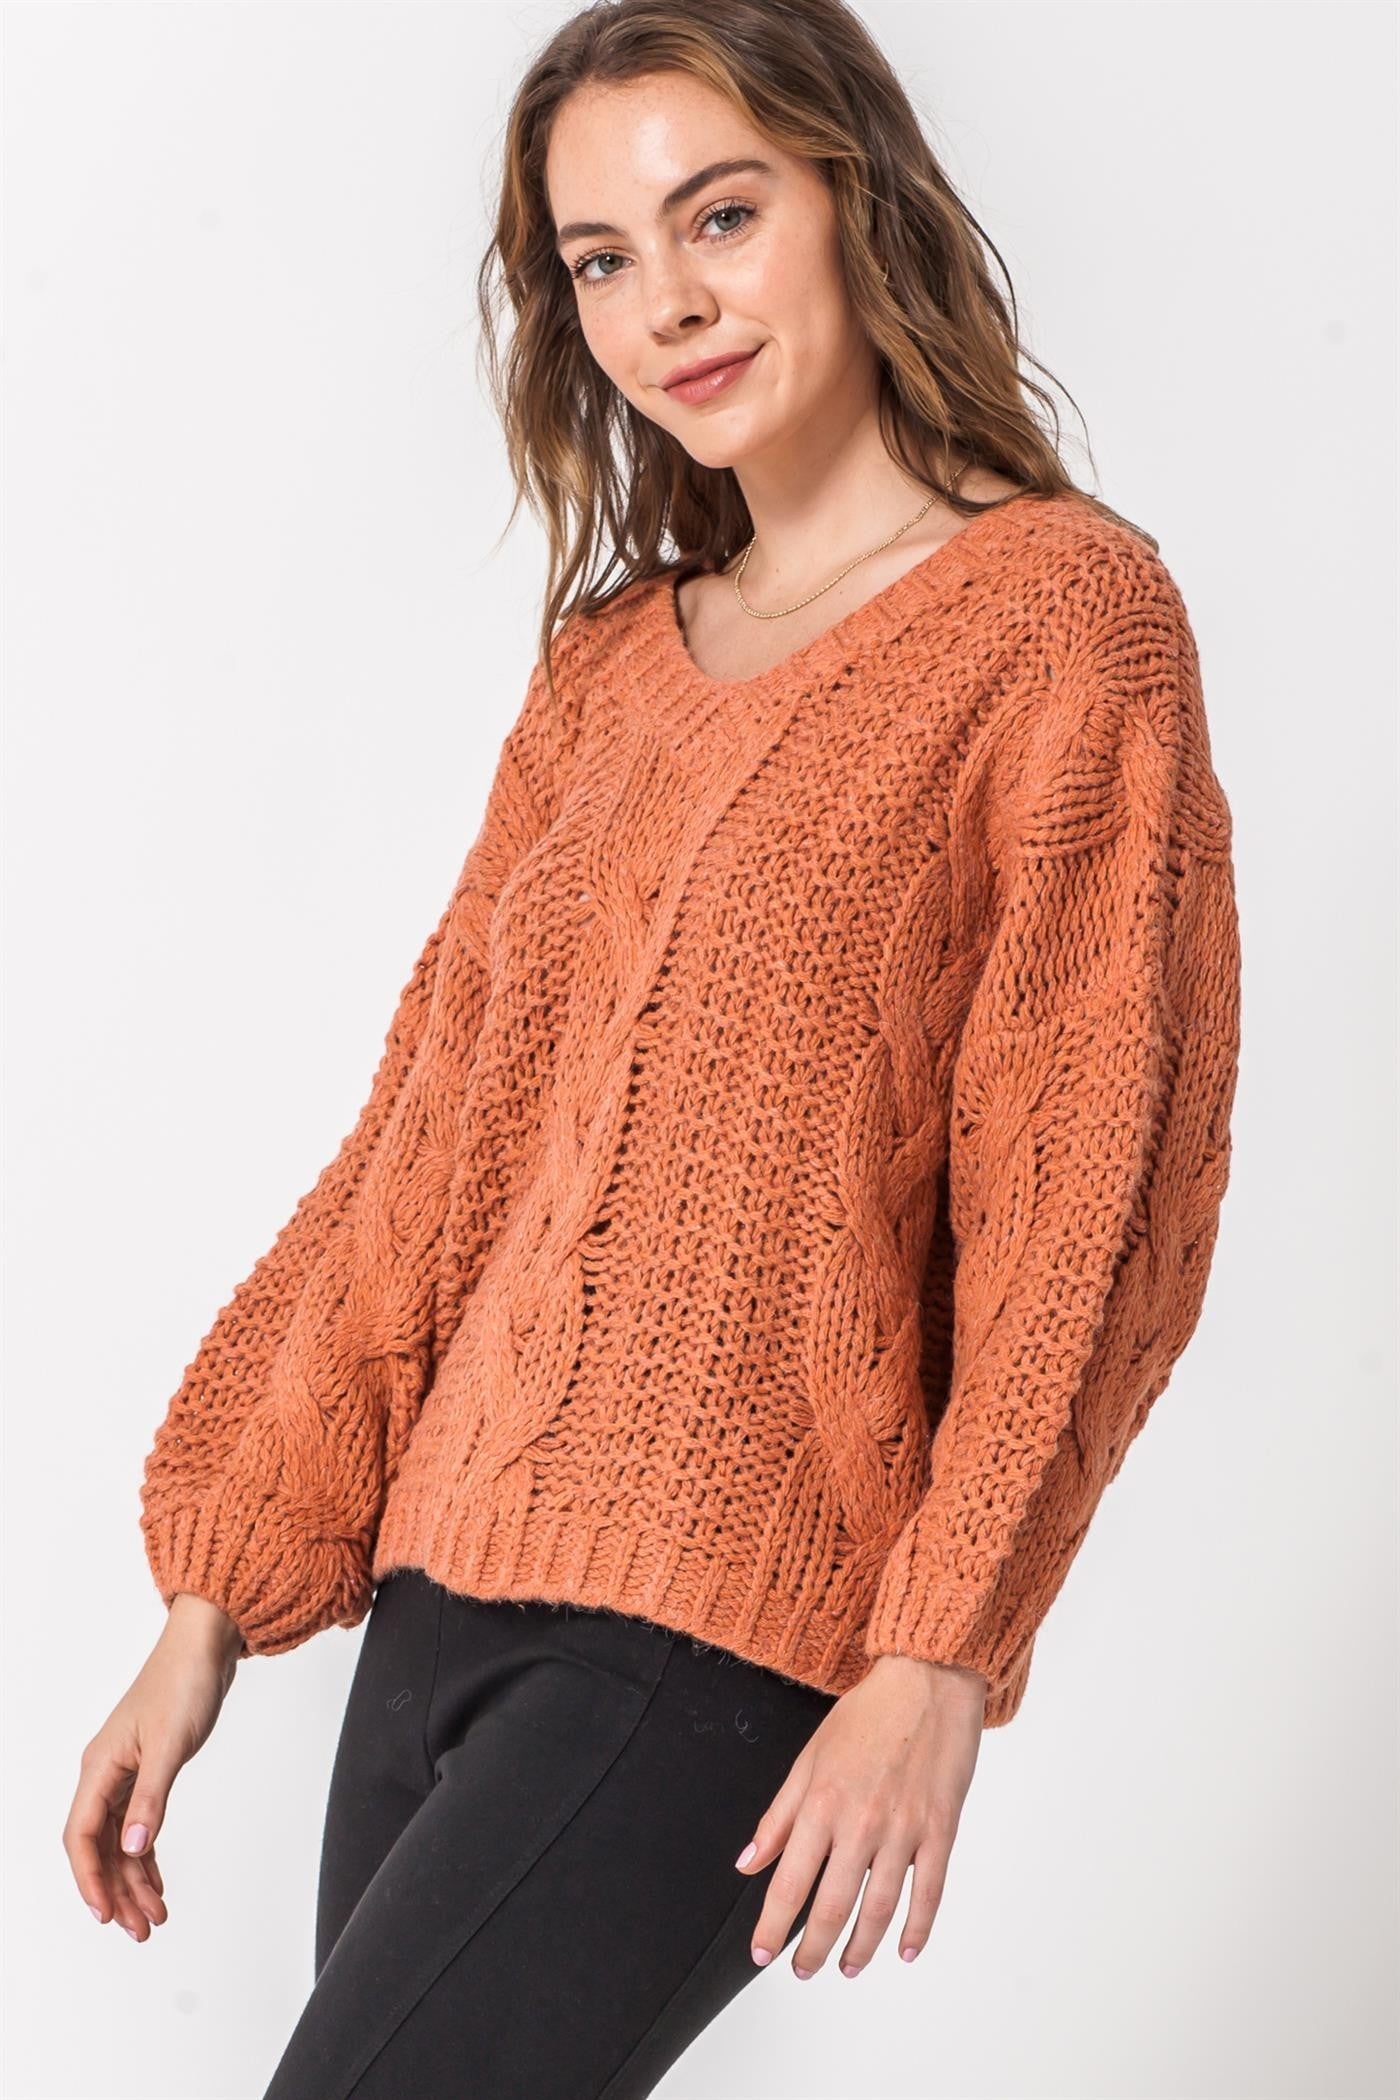 Copper Sweater *Final Sale*